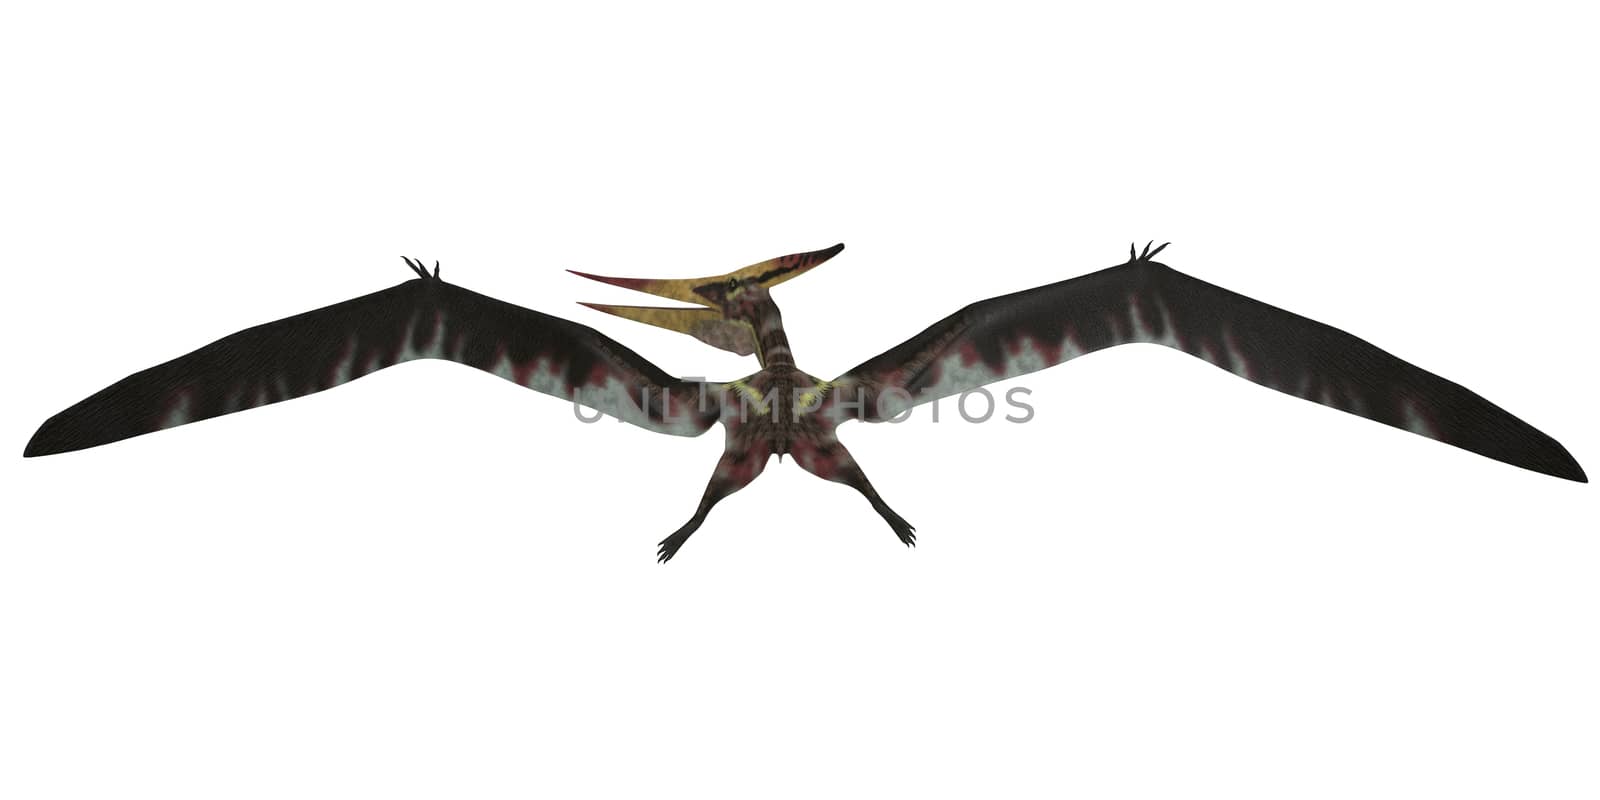 Pteranodon Flight on White by Catmando